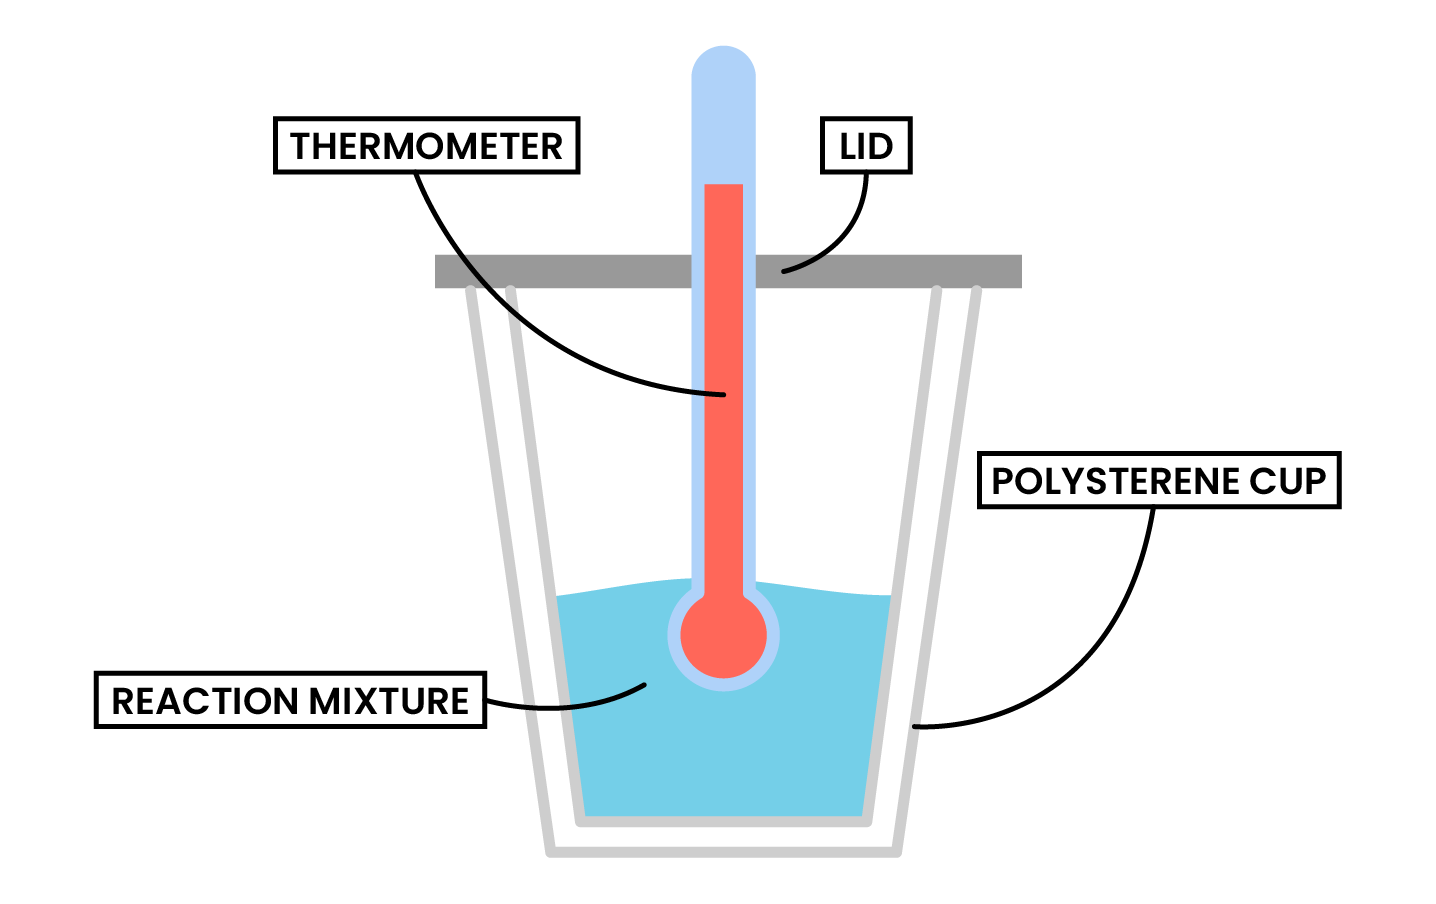 edexcel_igcse_chemistry_topic 18_energetics_003_calorimetry apparatus setup diagram labelled